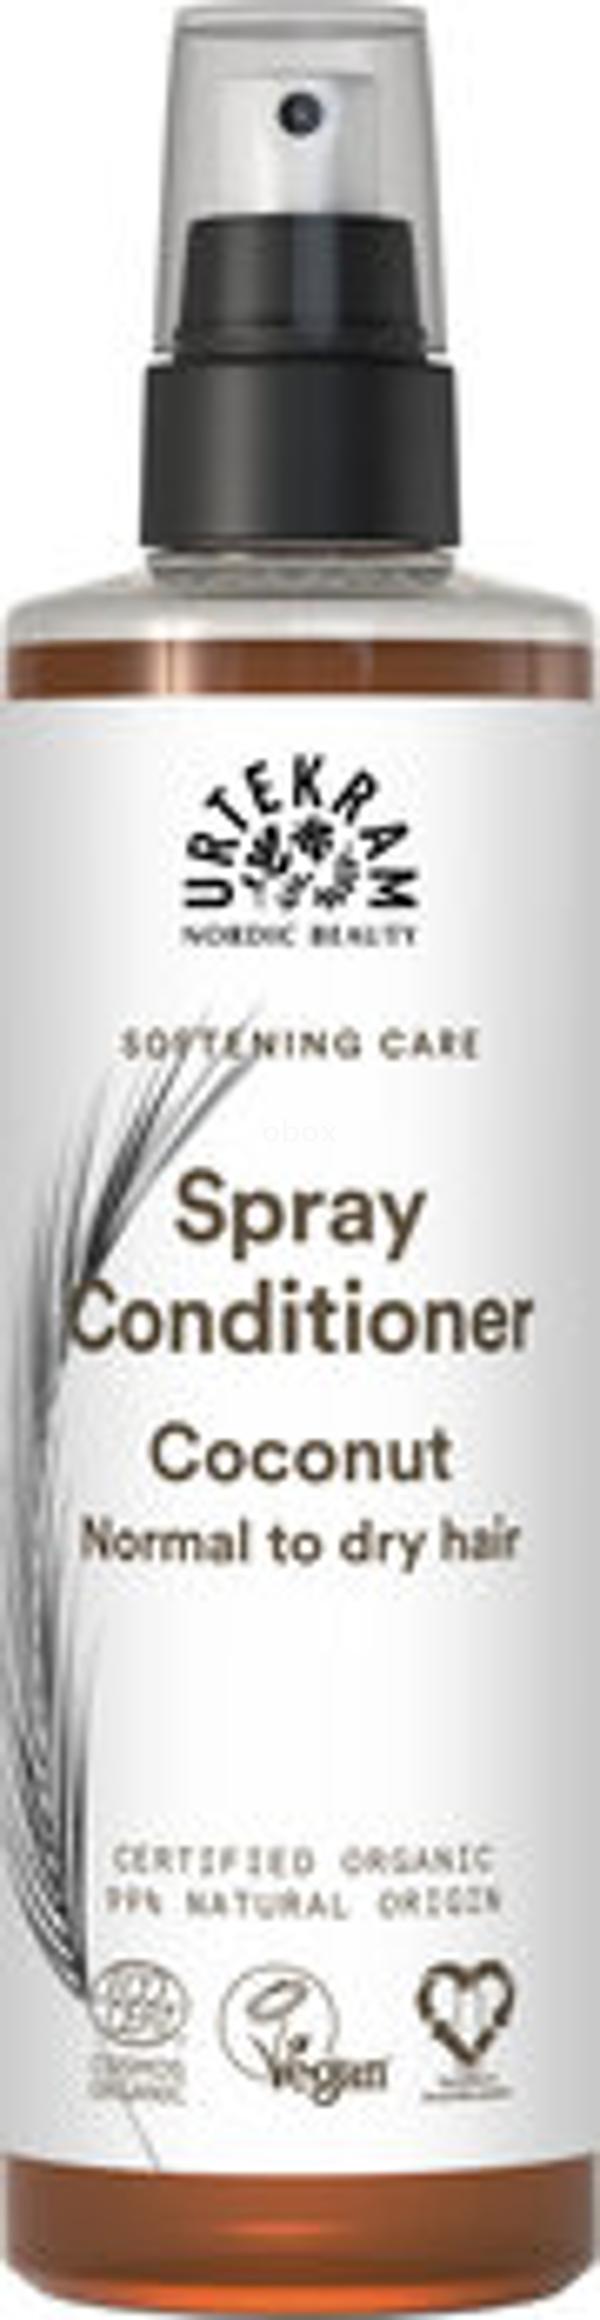 Produktfoto zu Kokos Spray Conditioner